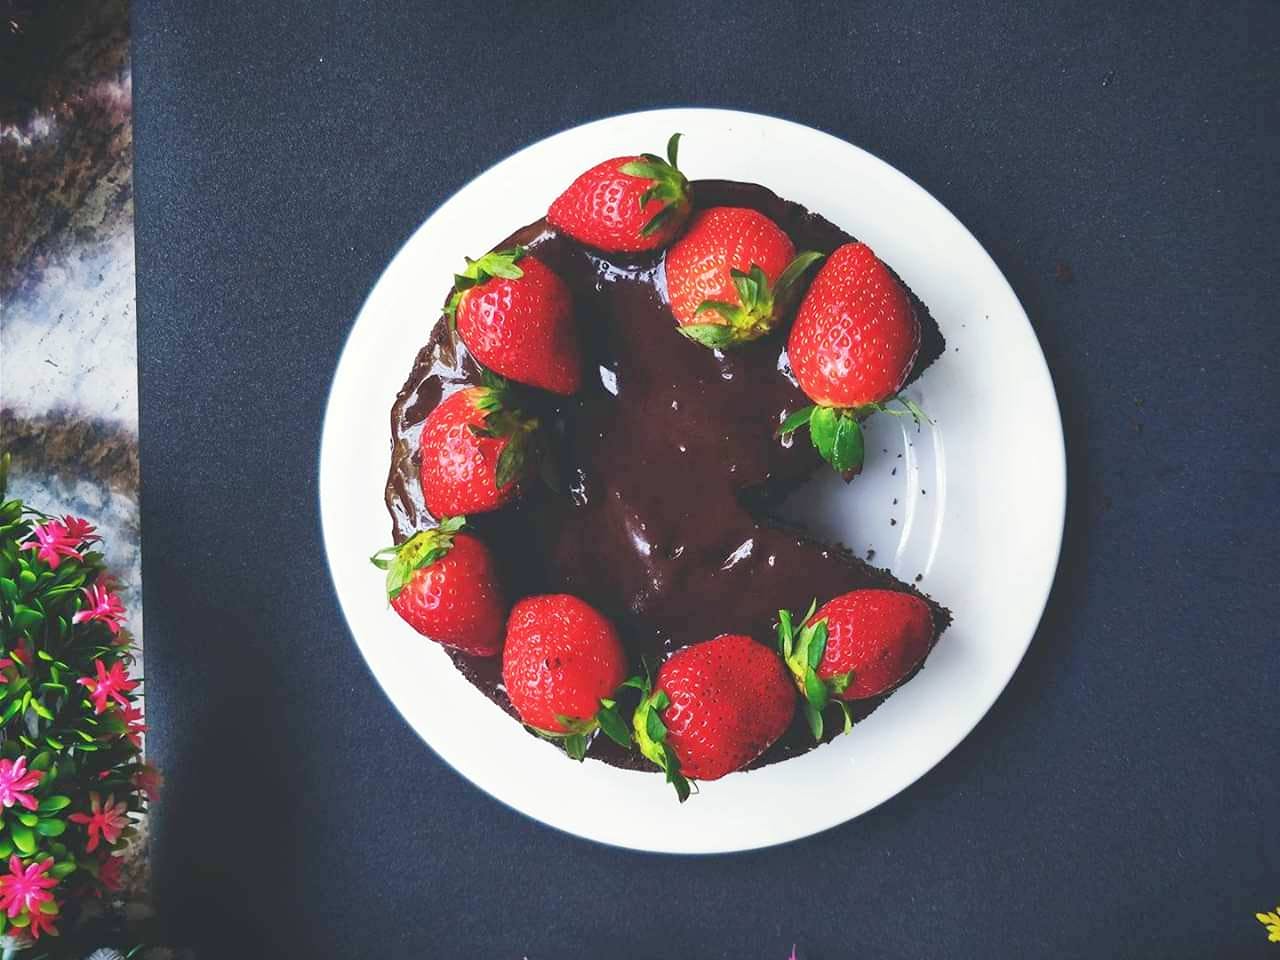 Strawberry,Strawberries,Food,Fruit,Sweetness,Plate,Berry,Plant,Chocolate cake,Dish